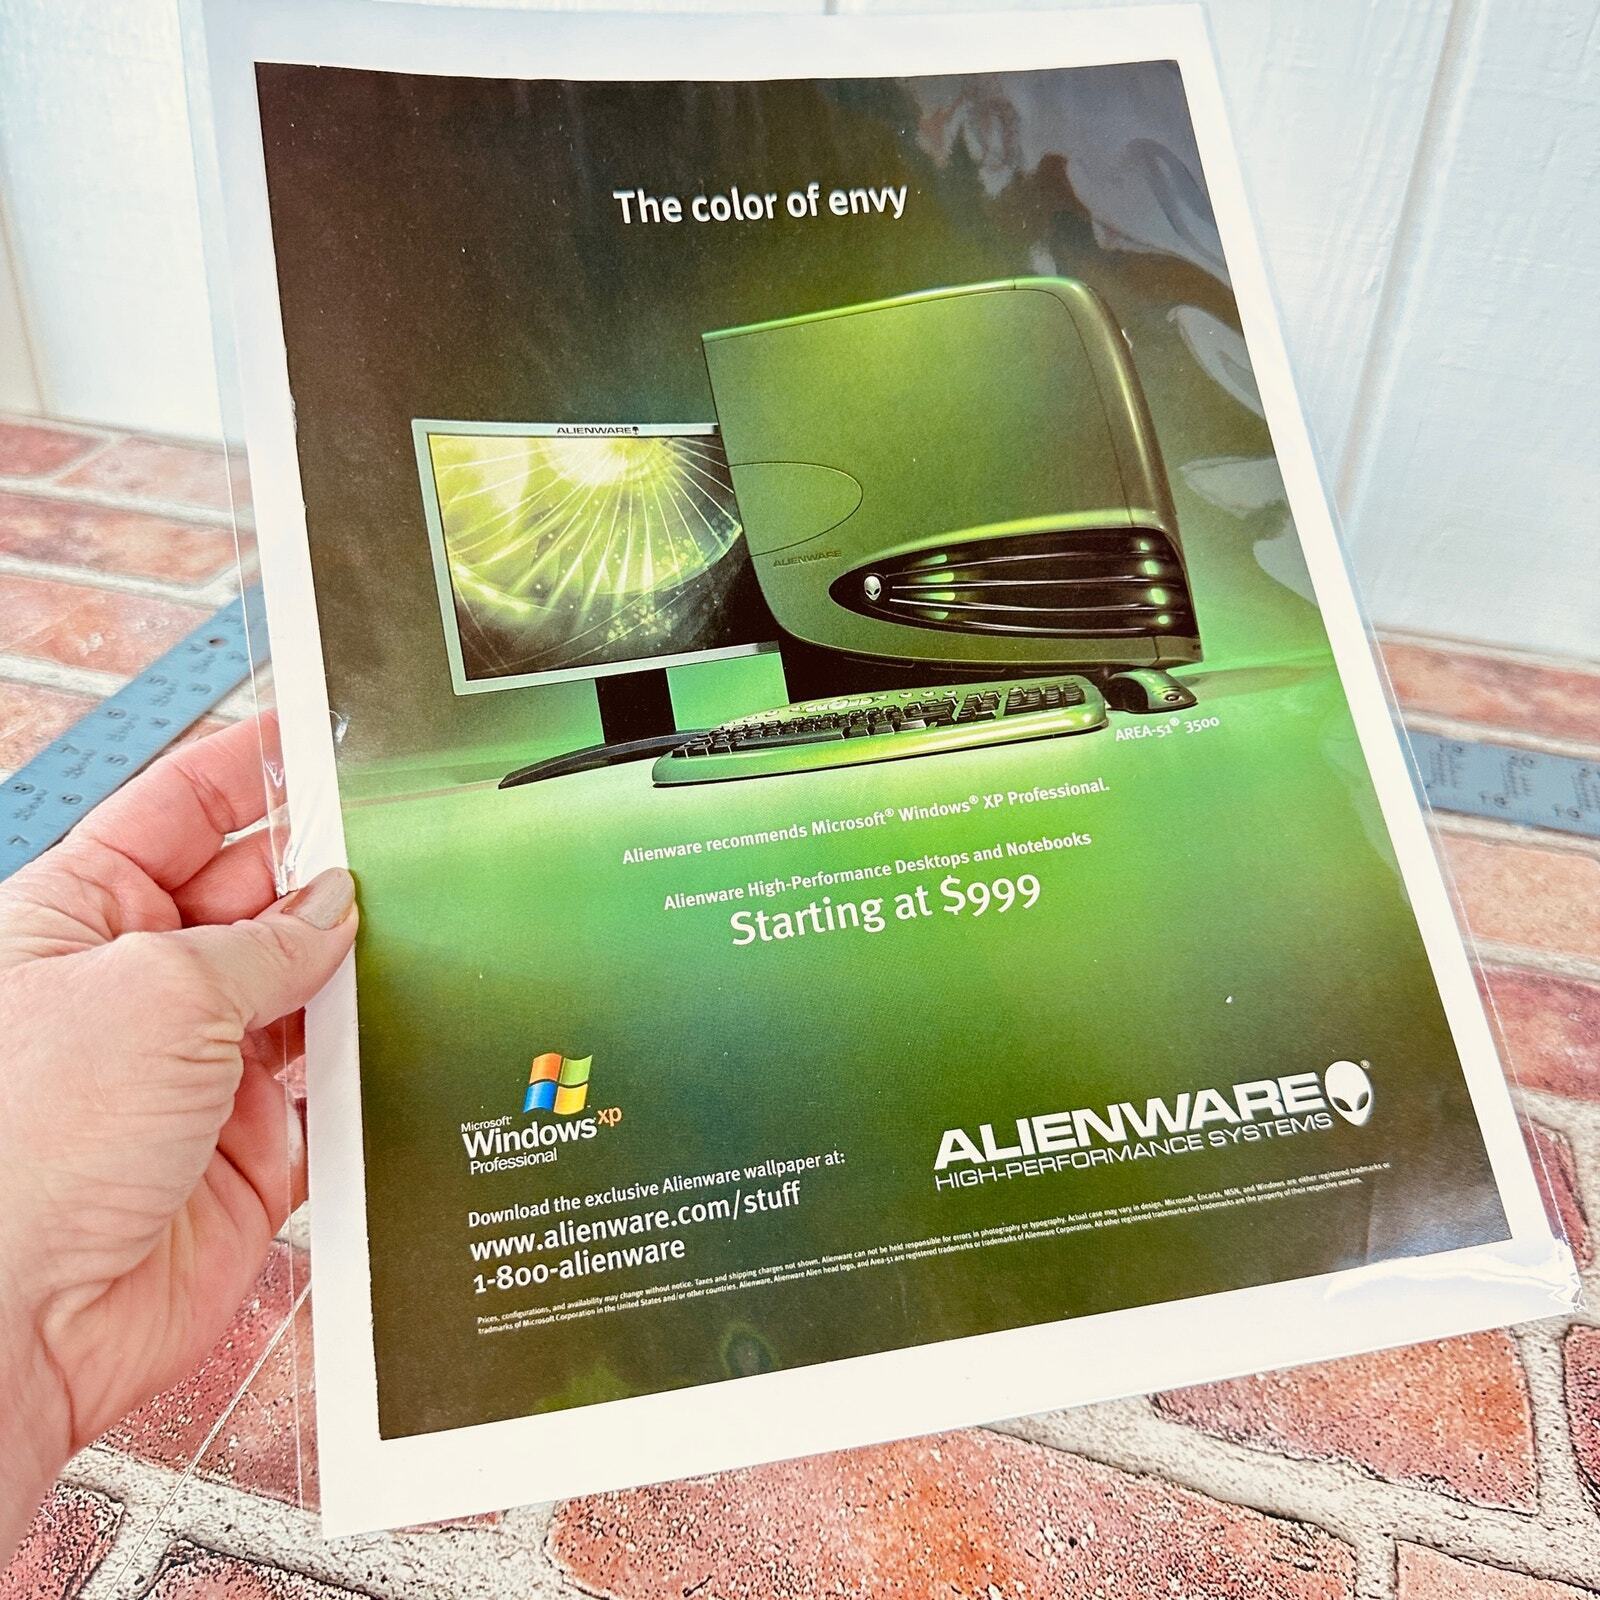 2005 Alienware Windows XP Color of Envy - Green - Original Vtg PRINT AD